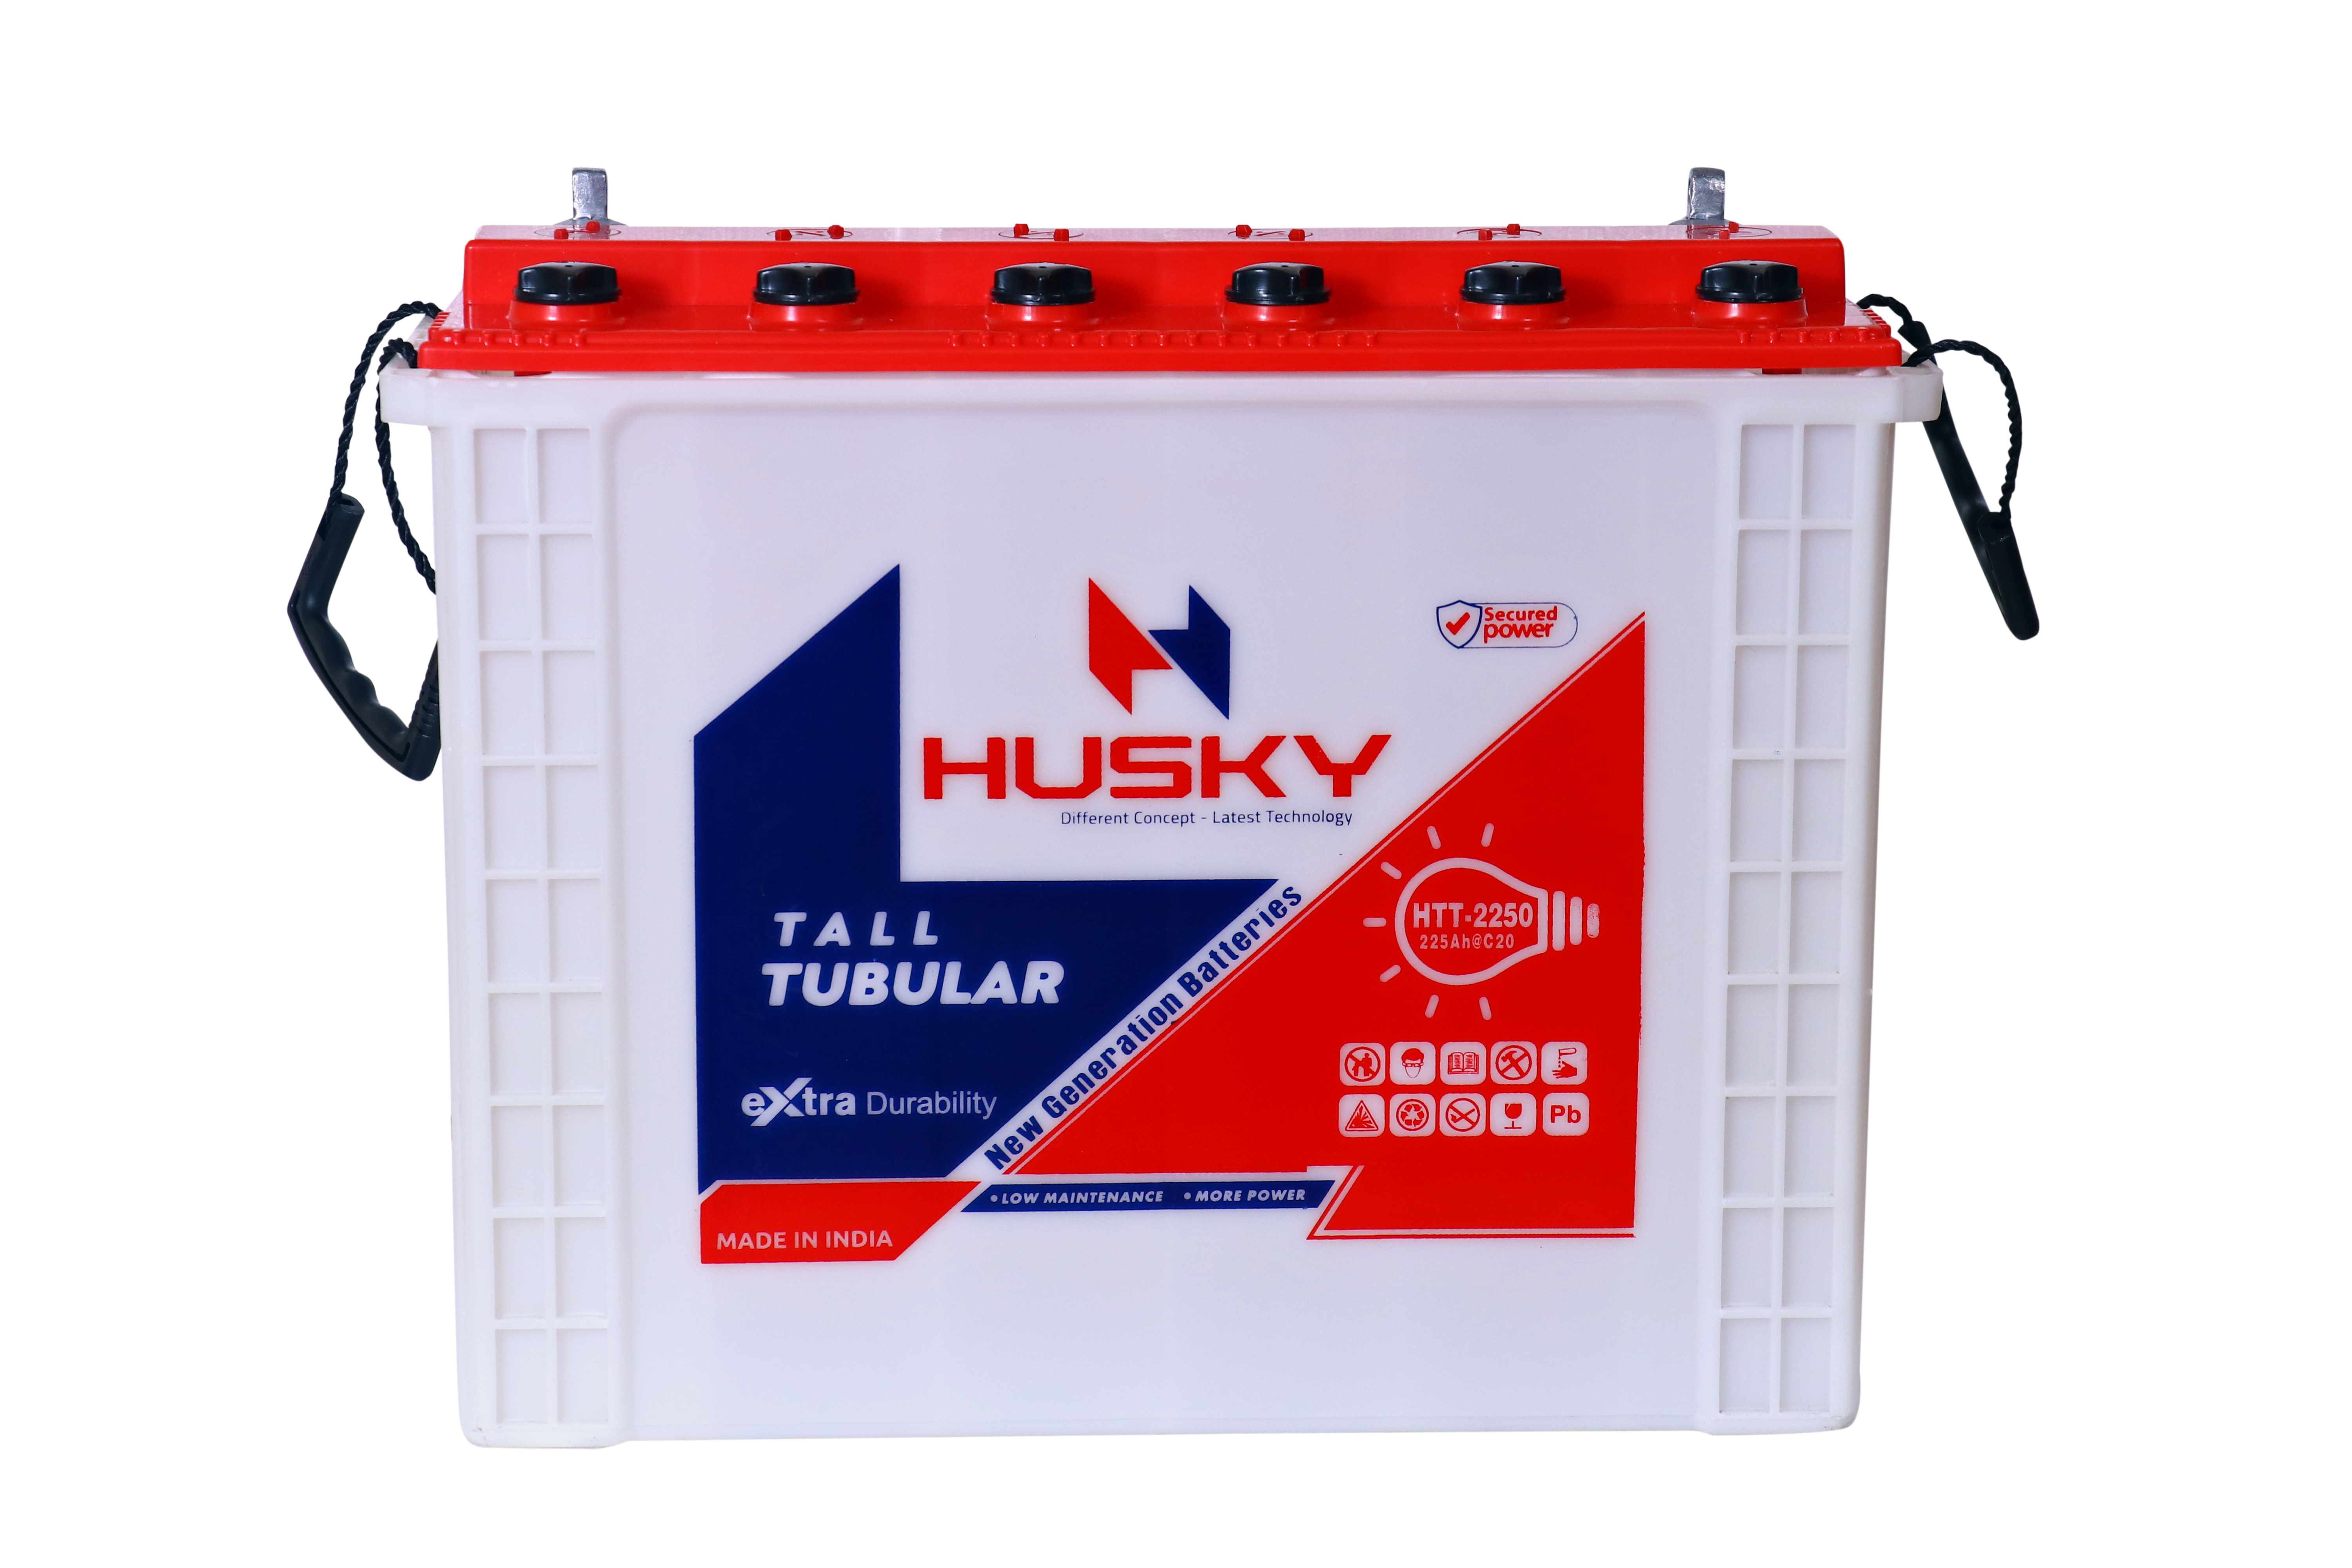 Husky tall tubular battery